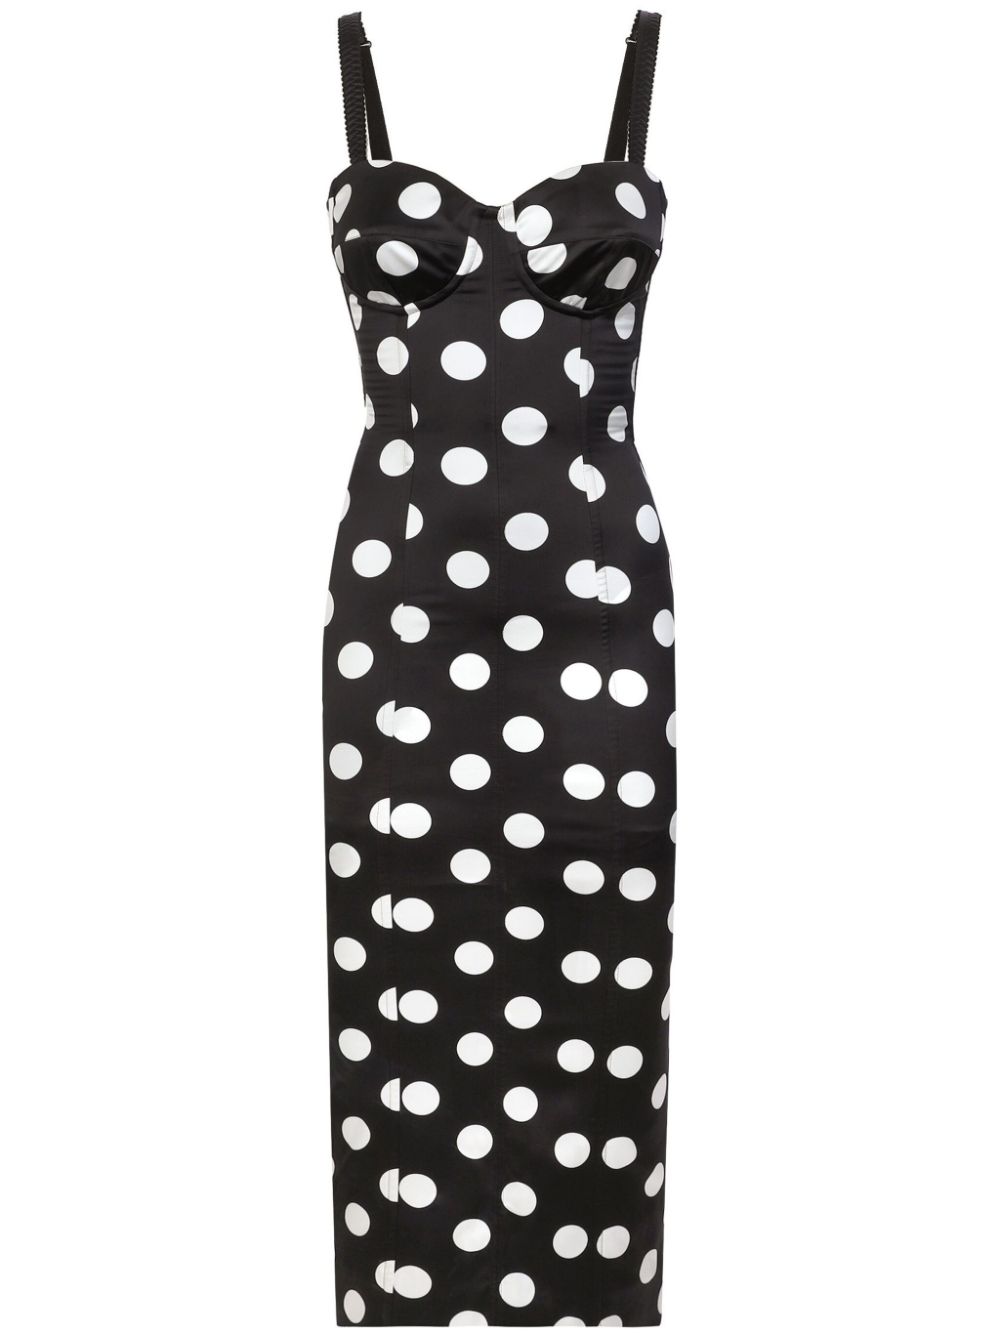 Dolce & Gabbana Polka Dot-print Satin Dress In Black/white | ModeSens